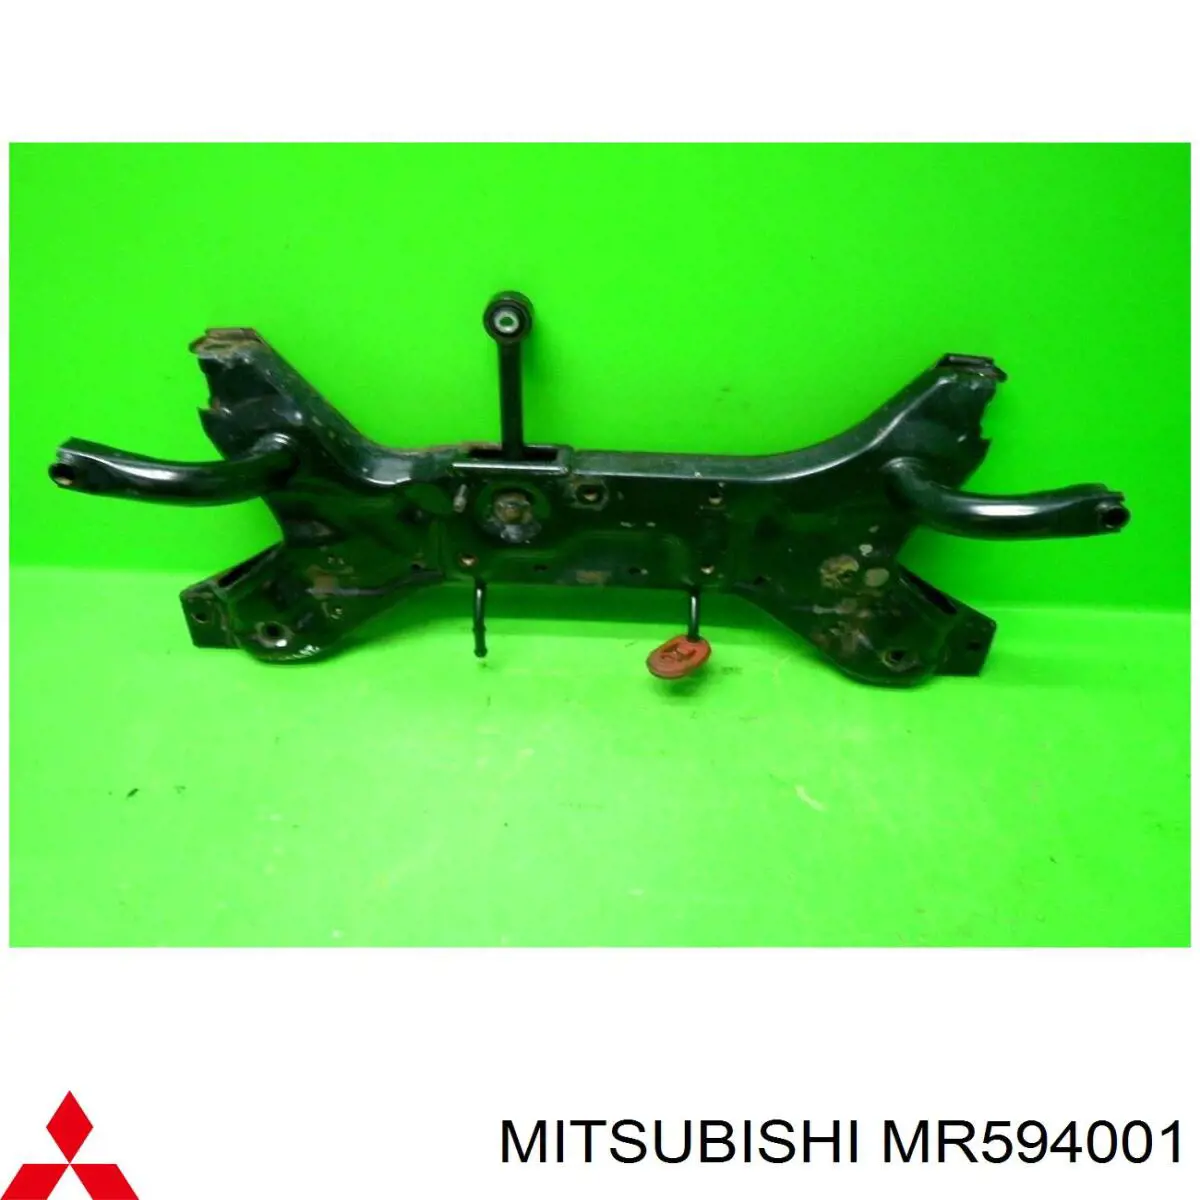 MR594001 Mitsubishi subchasis delantero soporte motor